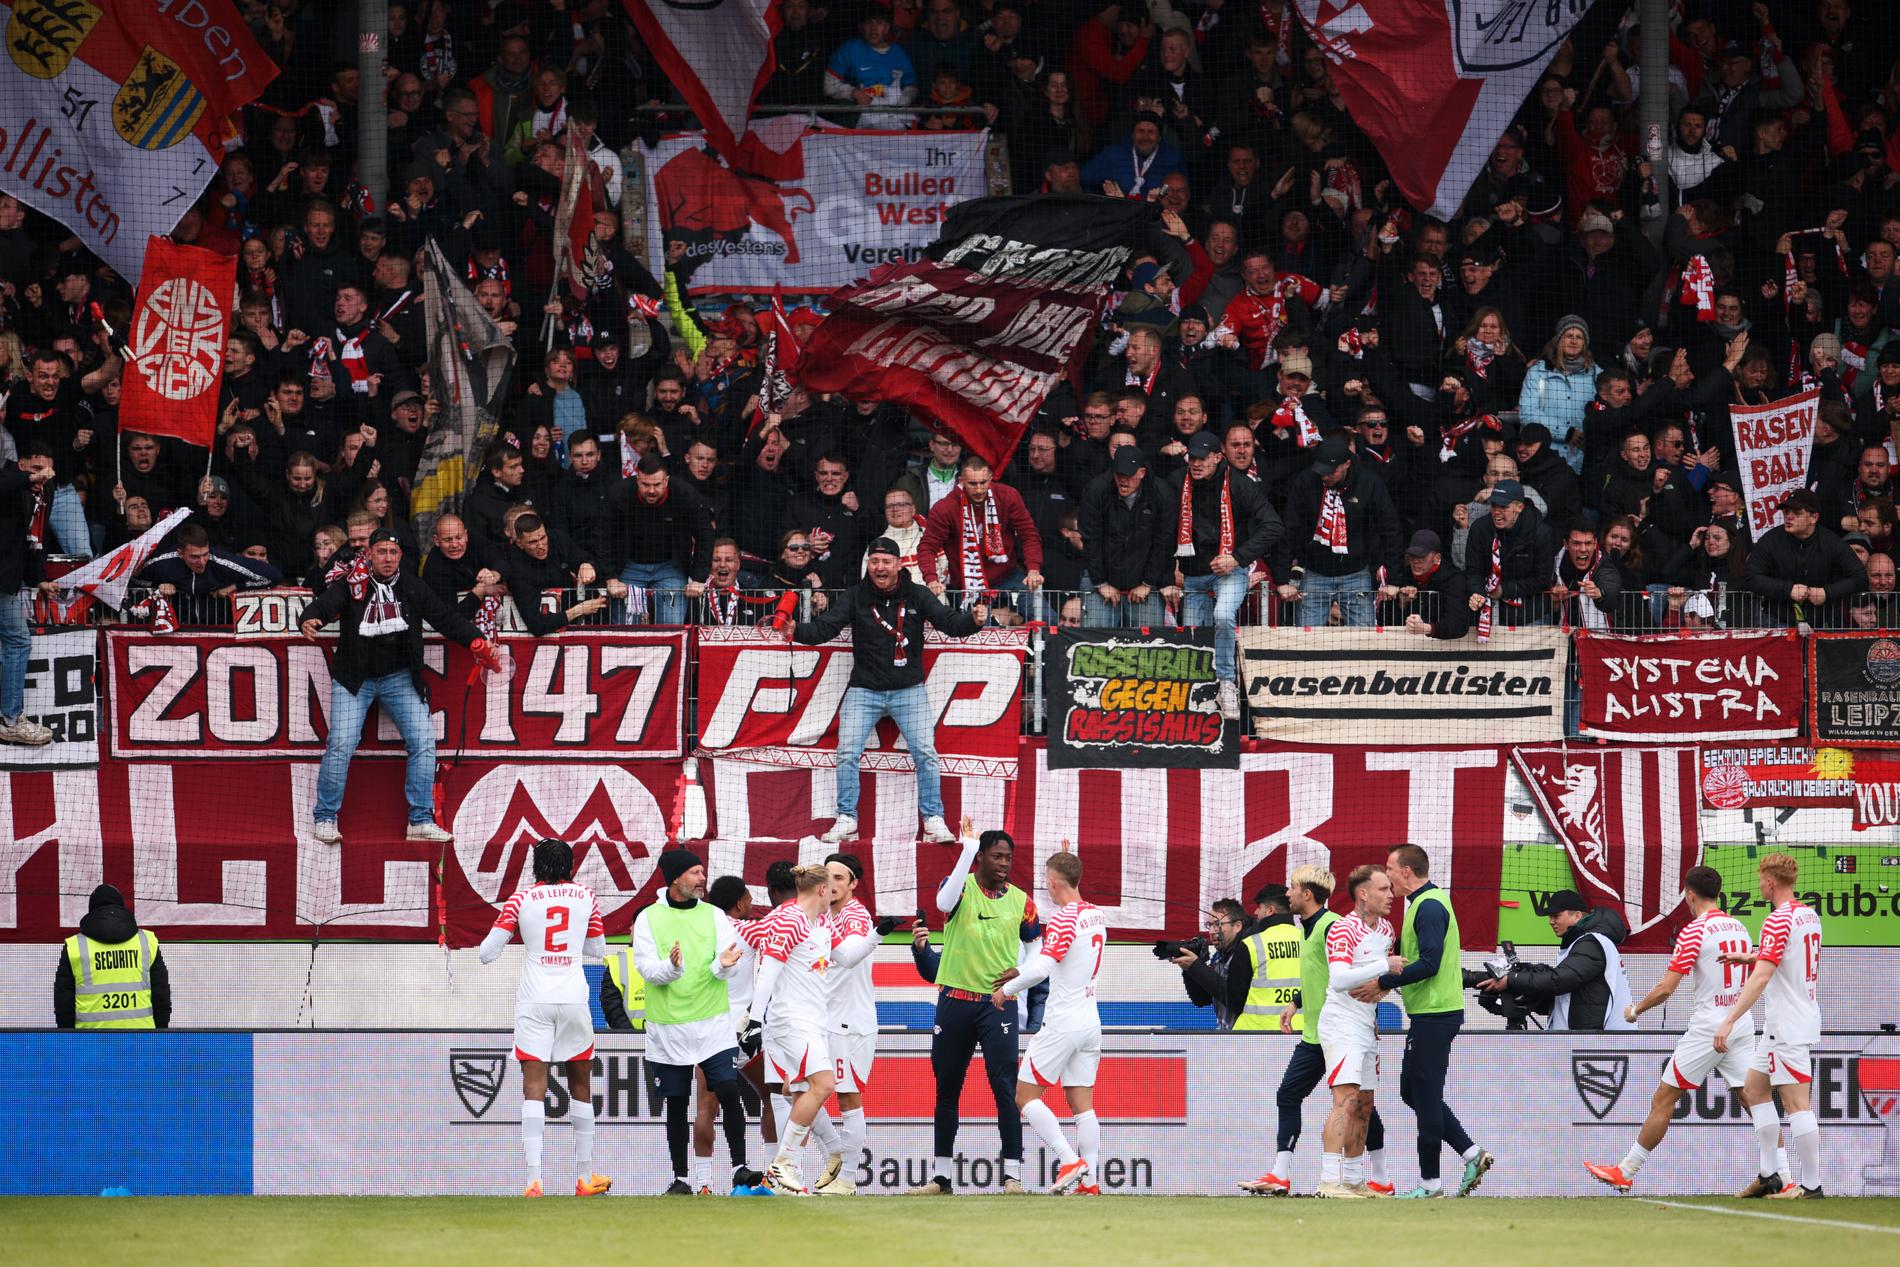 RB Leipzigs fans firar segern i Heidenheim i lördags.